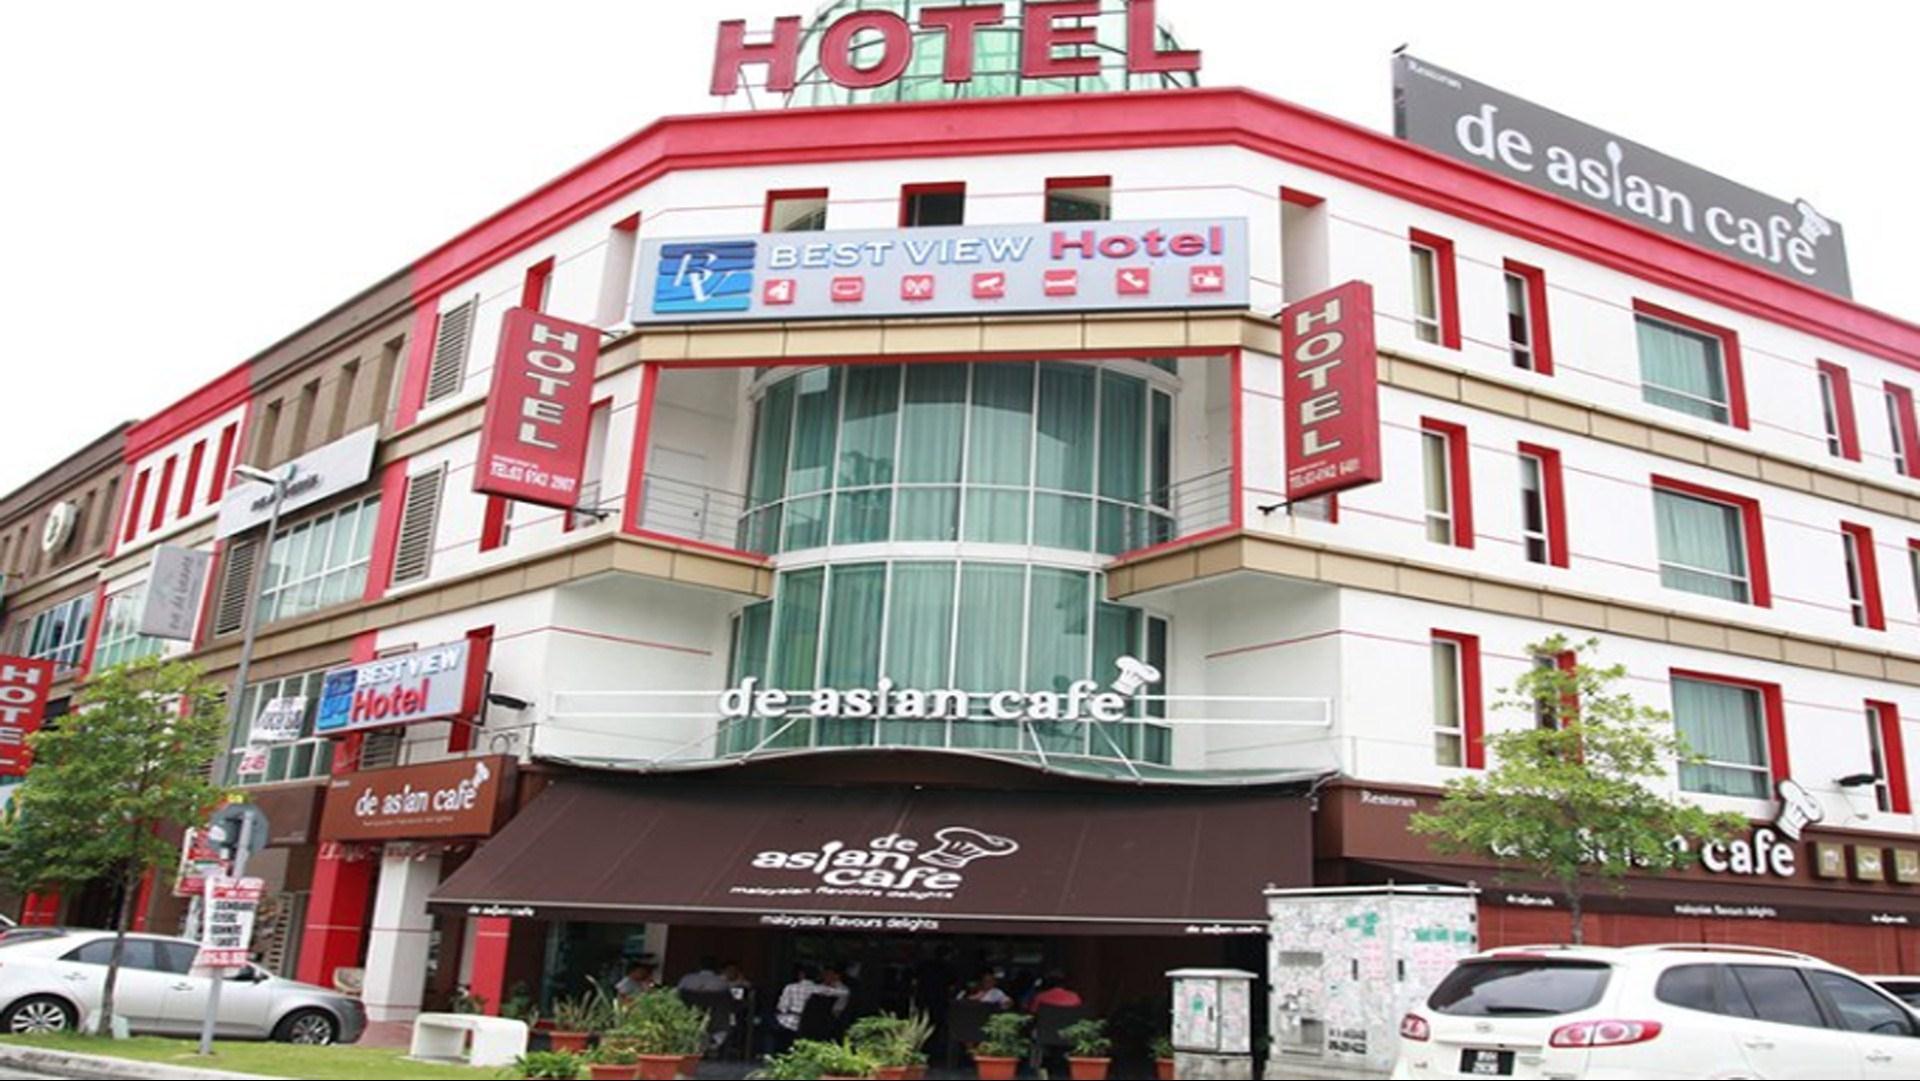 Best View Hotel, Kota Damansara in Petaling Jaya, MY